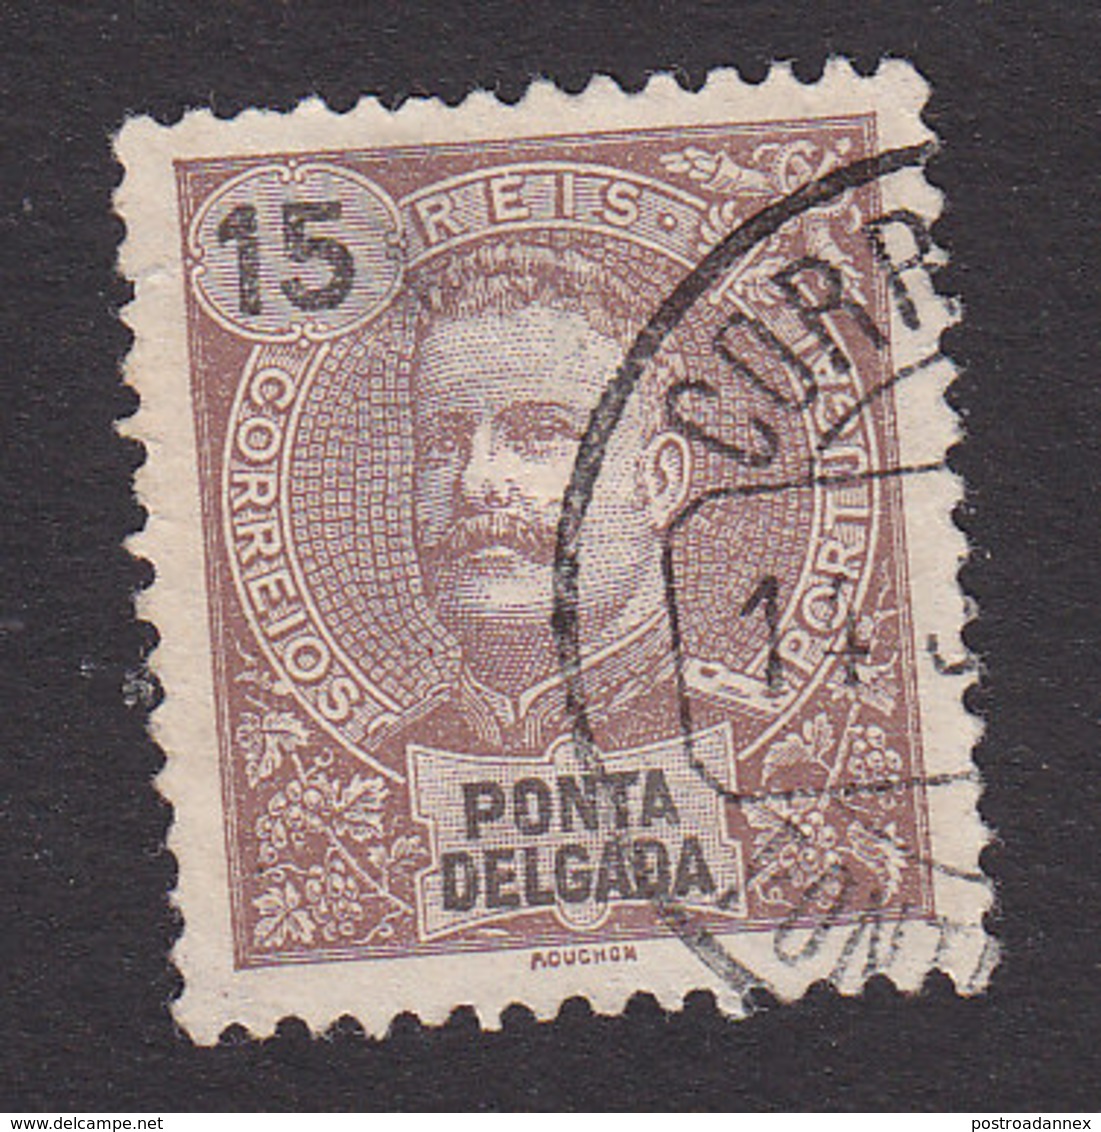 Ponta Delgada, Scott #16, Used, King Carlos, Issued 1897 - Ponta Delgada